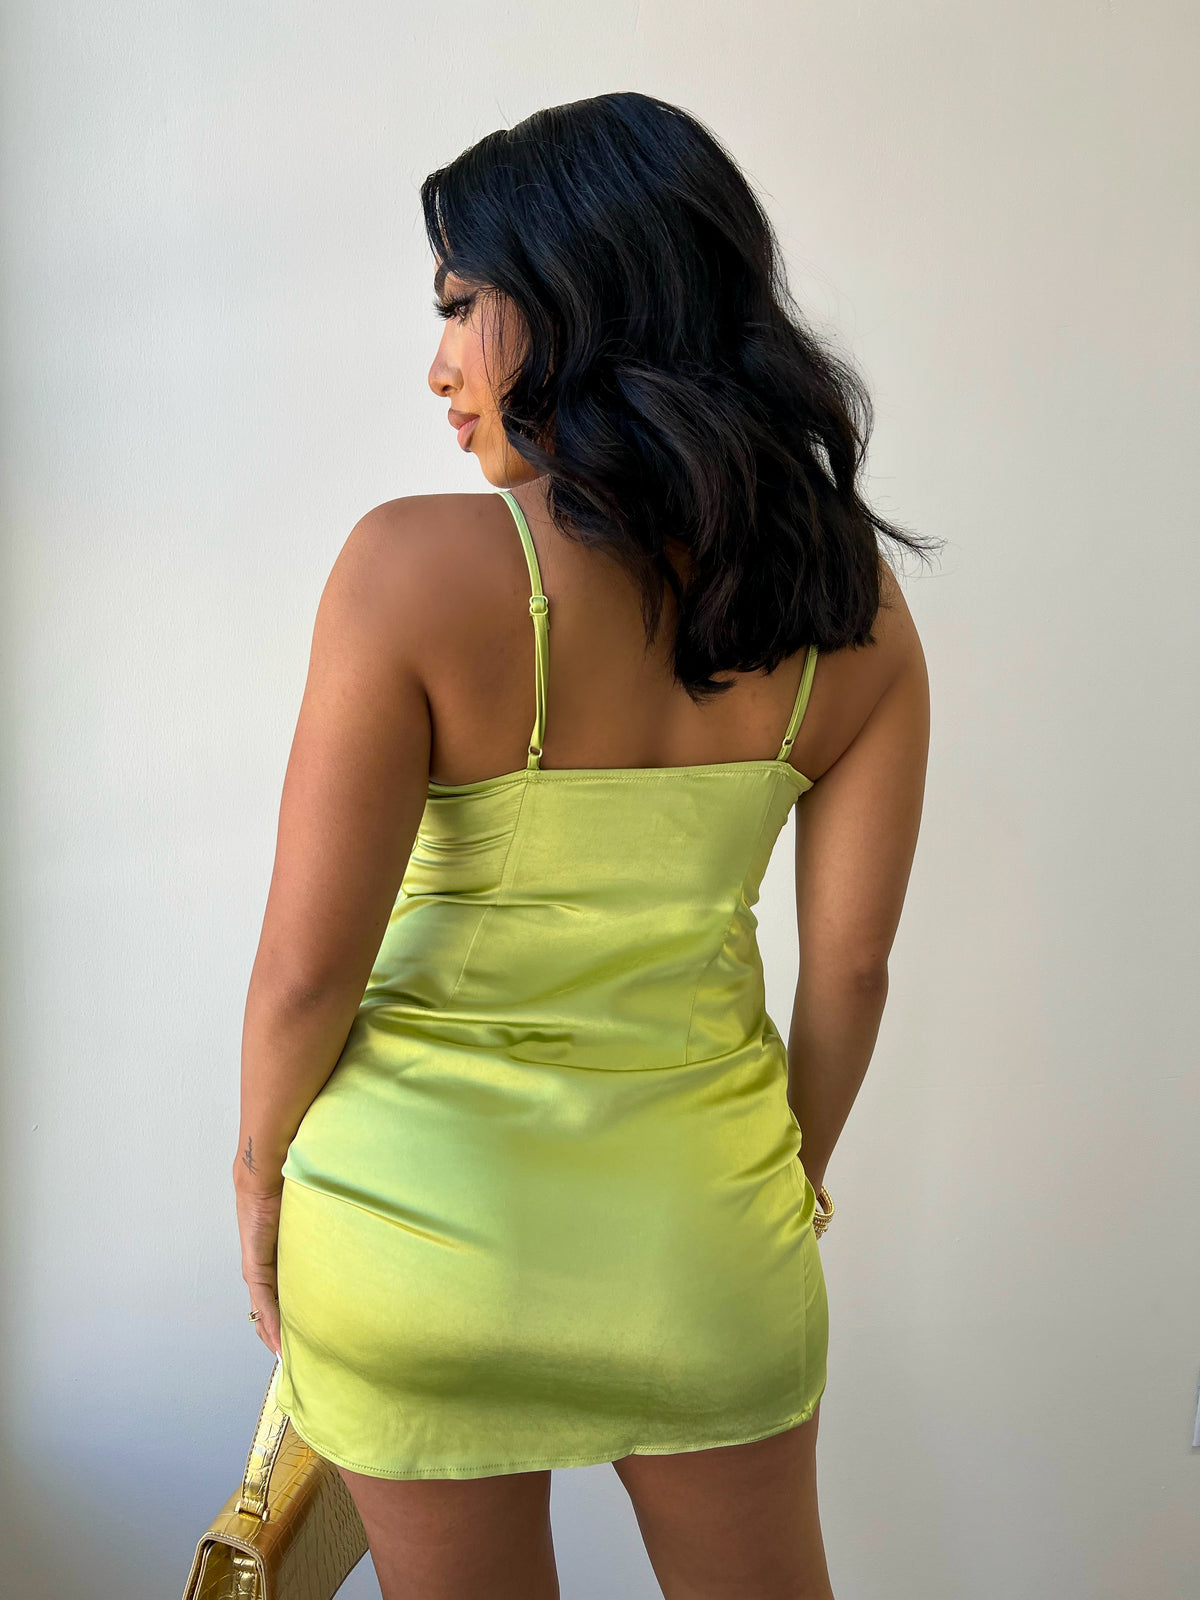 Stacy Satin Dress (Lime)